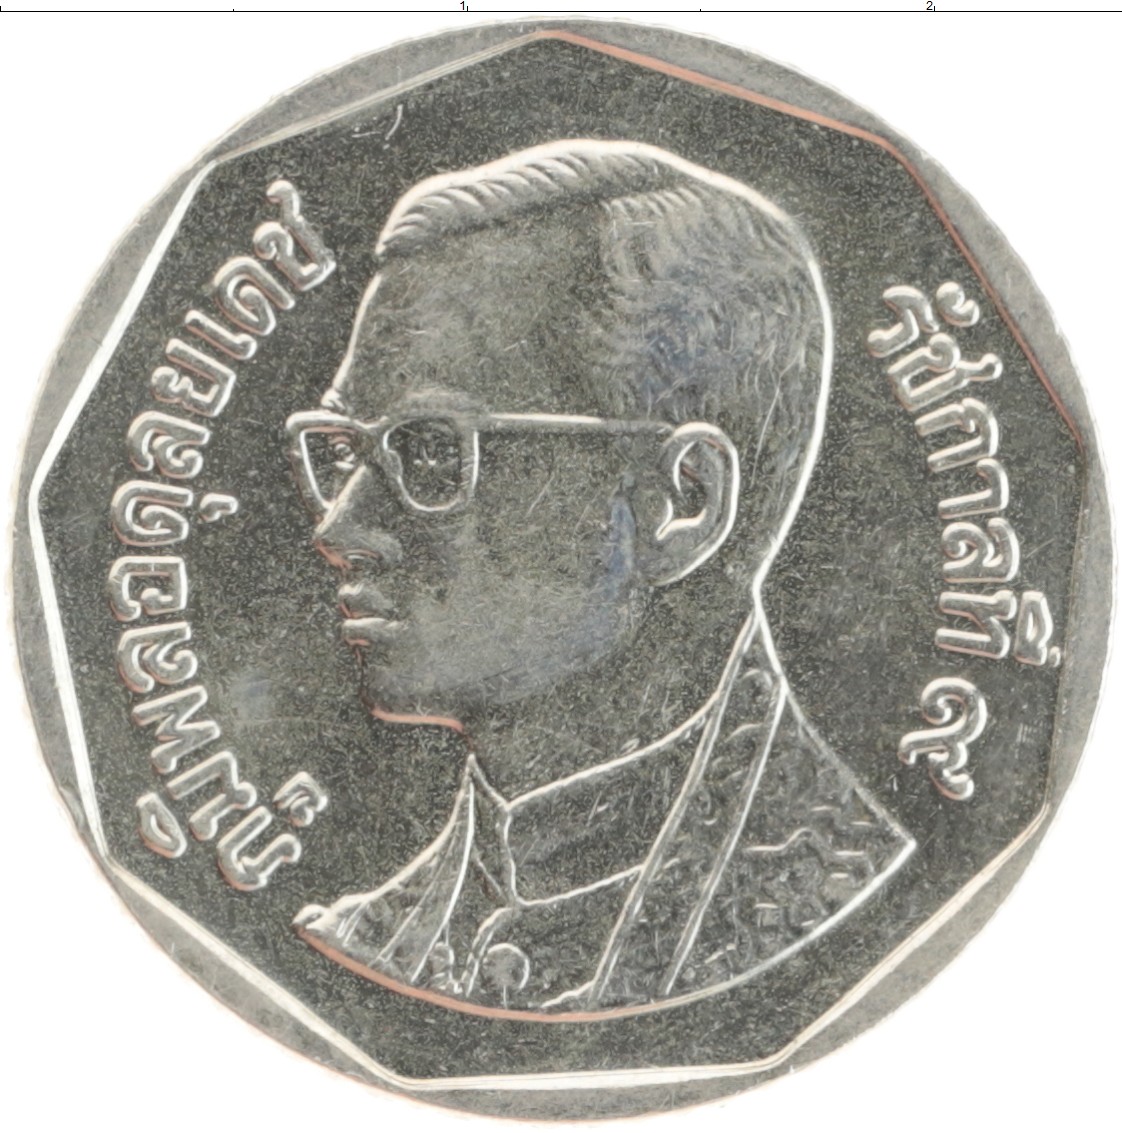 5 батов в рублях. Монета 5 бат Таиланд. Монеты Таиланда 5 бат 2006. 5 Бат 2006.